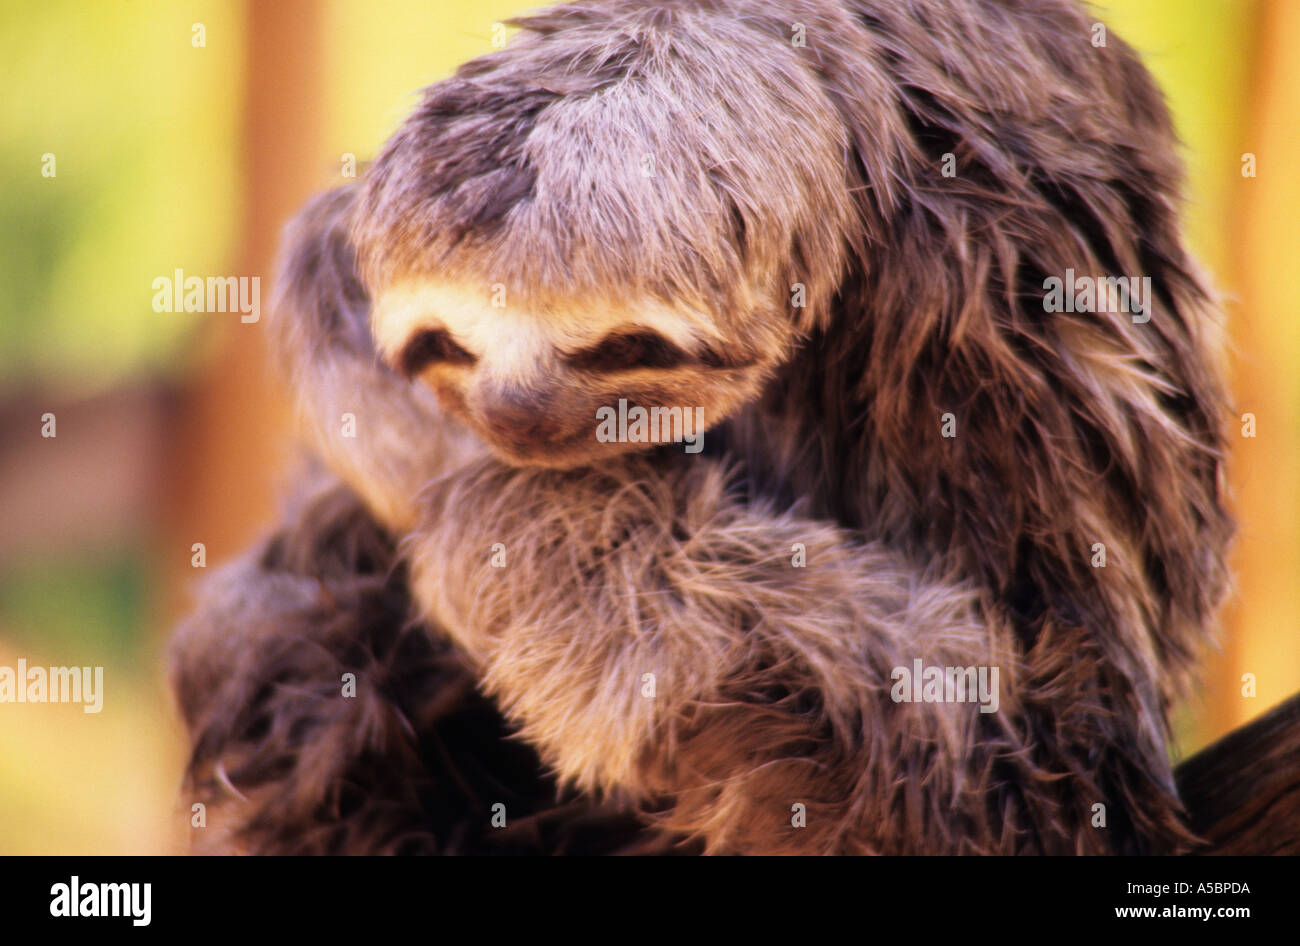 Boca da Valeria sloth amazonienne Amazone, Brésil Banque D'Images